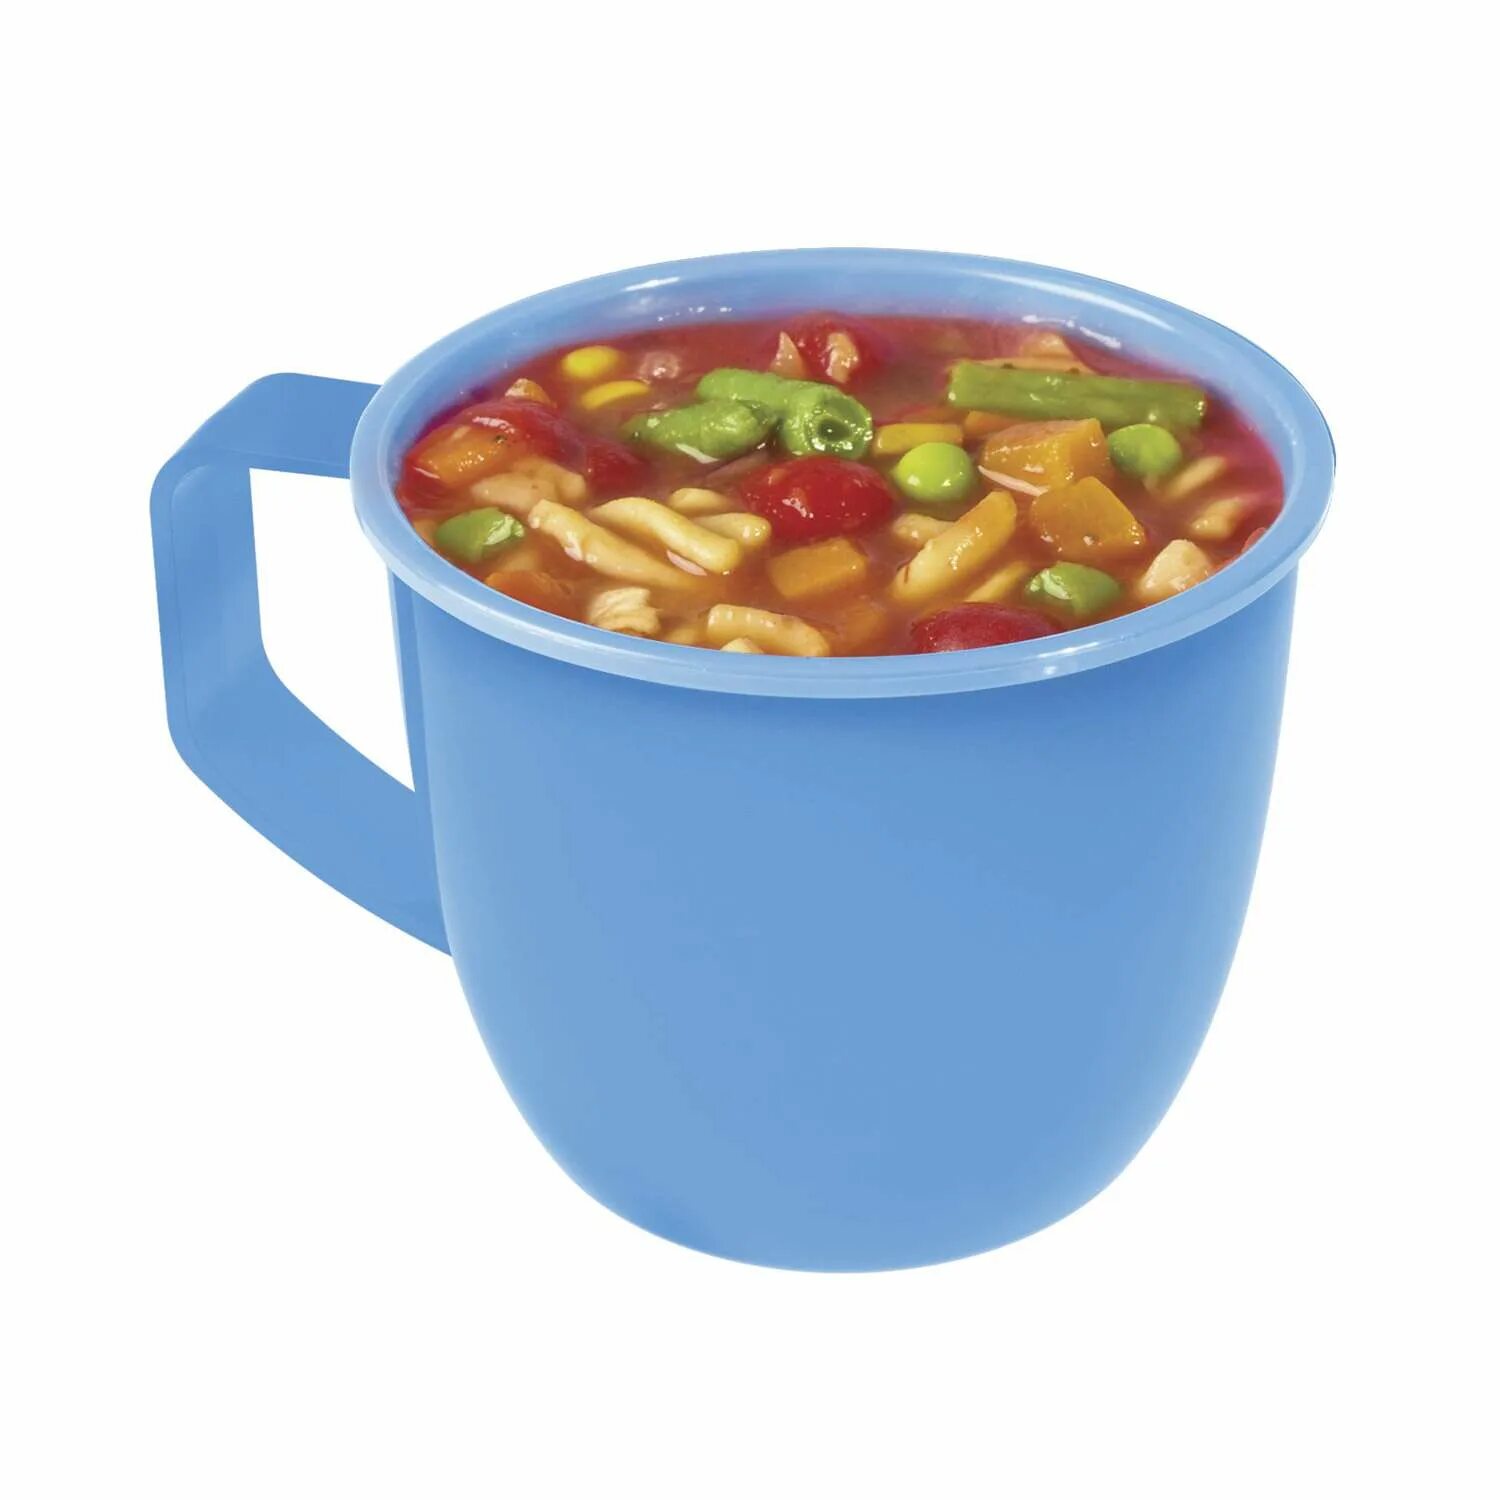 Soup go. Чашка супа. Глубокая чашка для супа. Суповая чашка. Чашка для супа с крышкой.